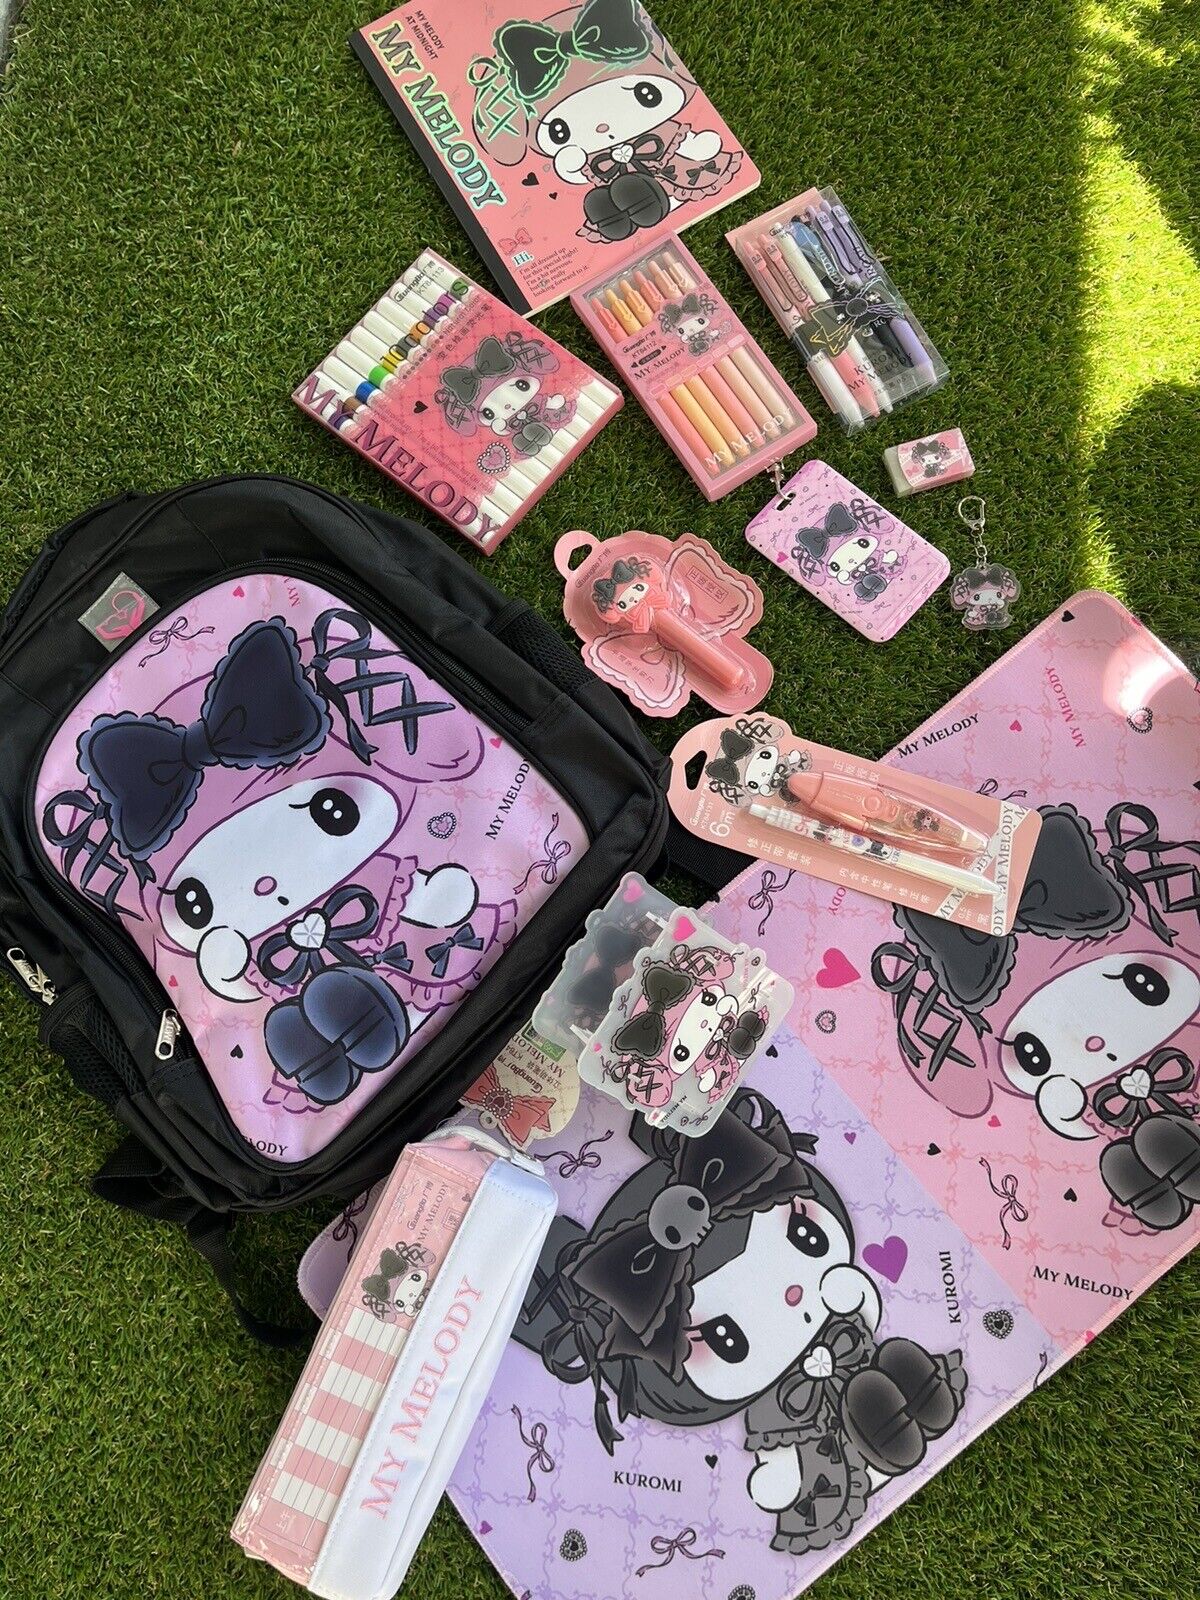 12 Pcs Set Kawaii Sanrio MyMelody Pink Back to School Supplies Bundle